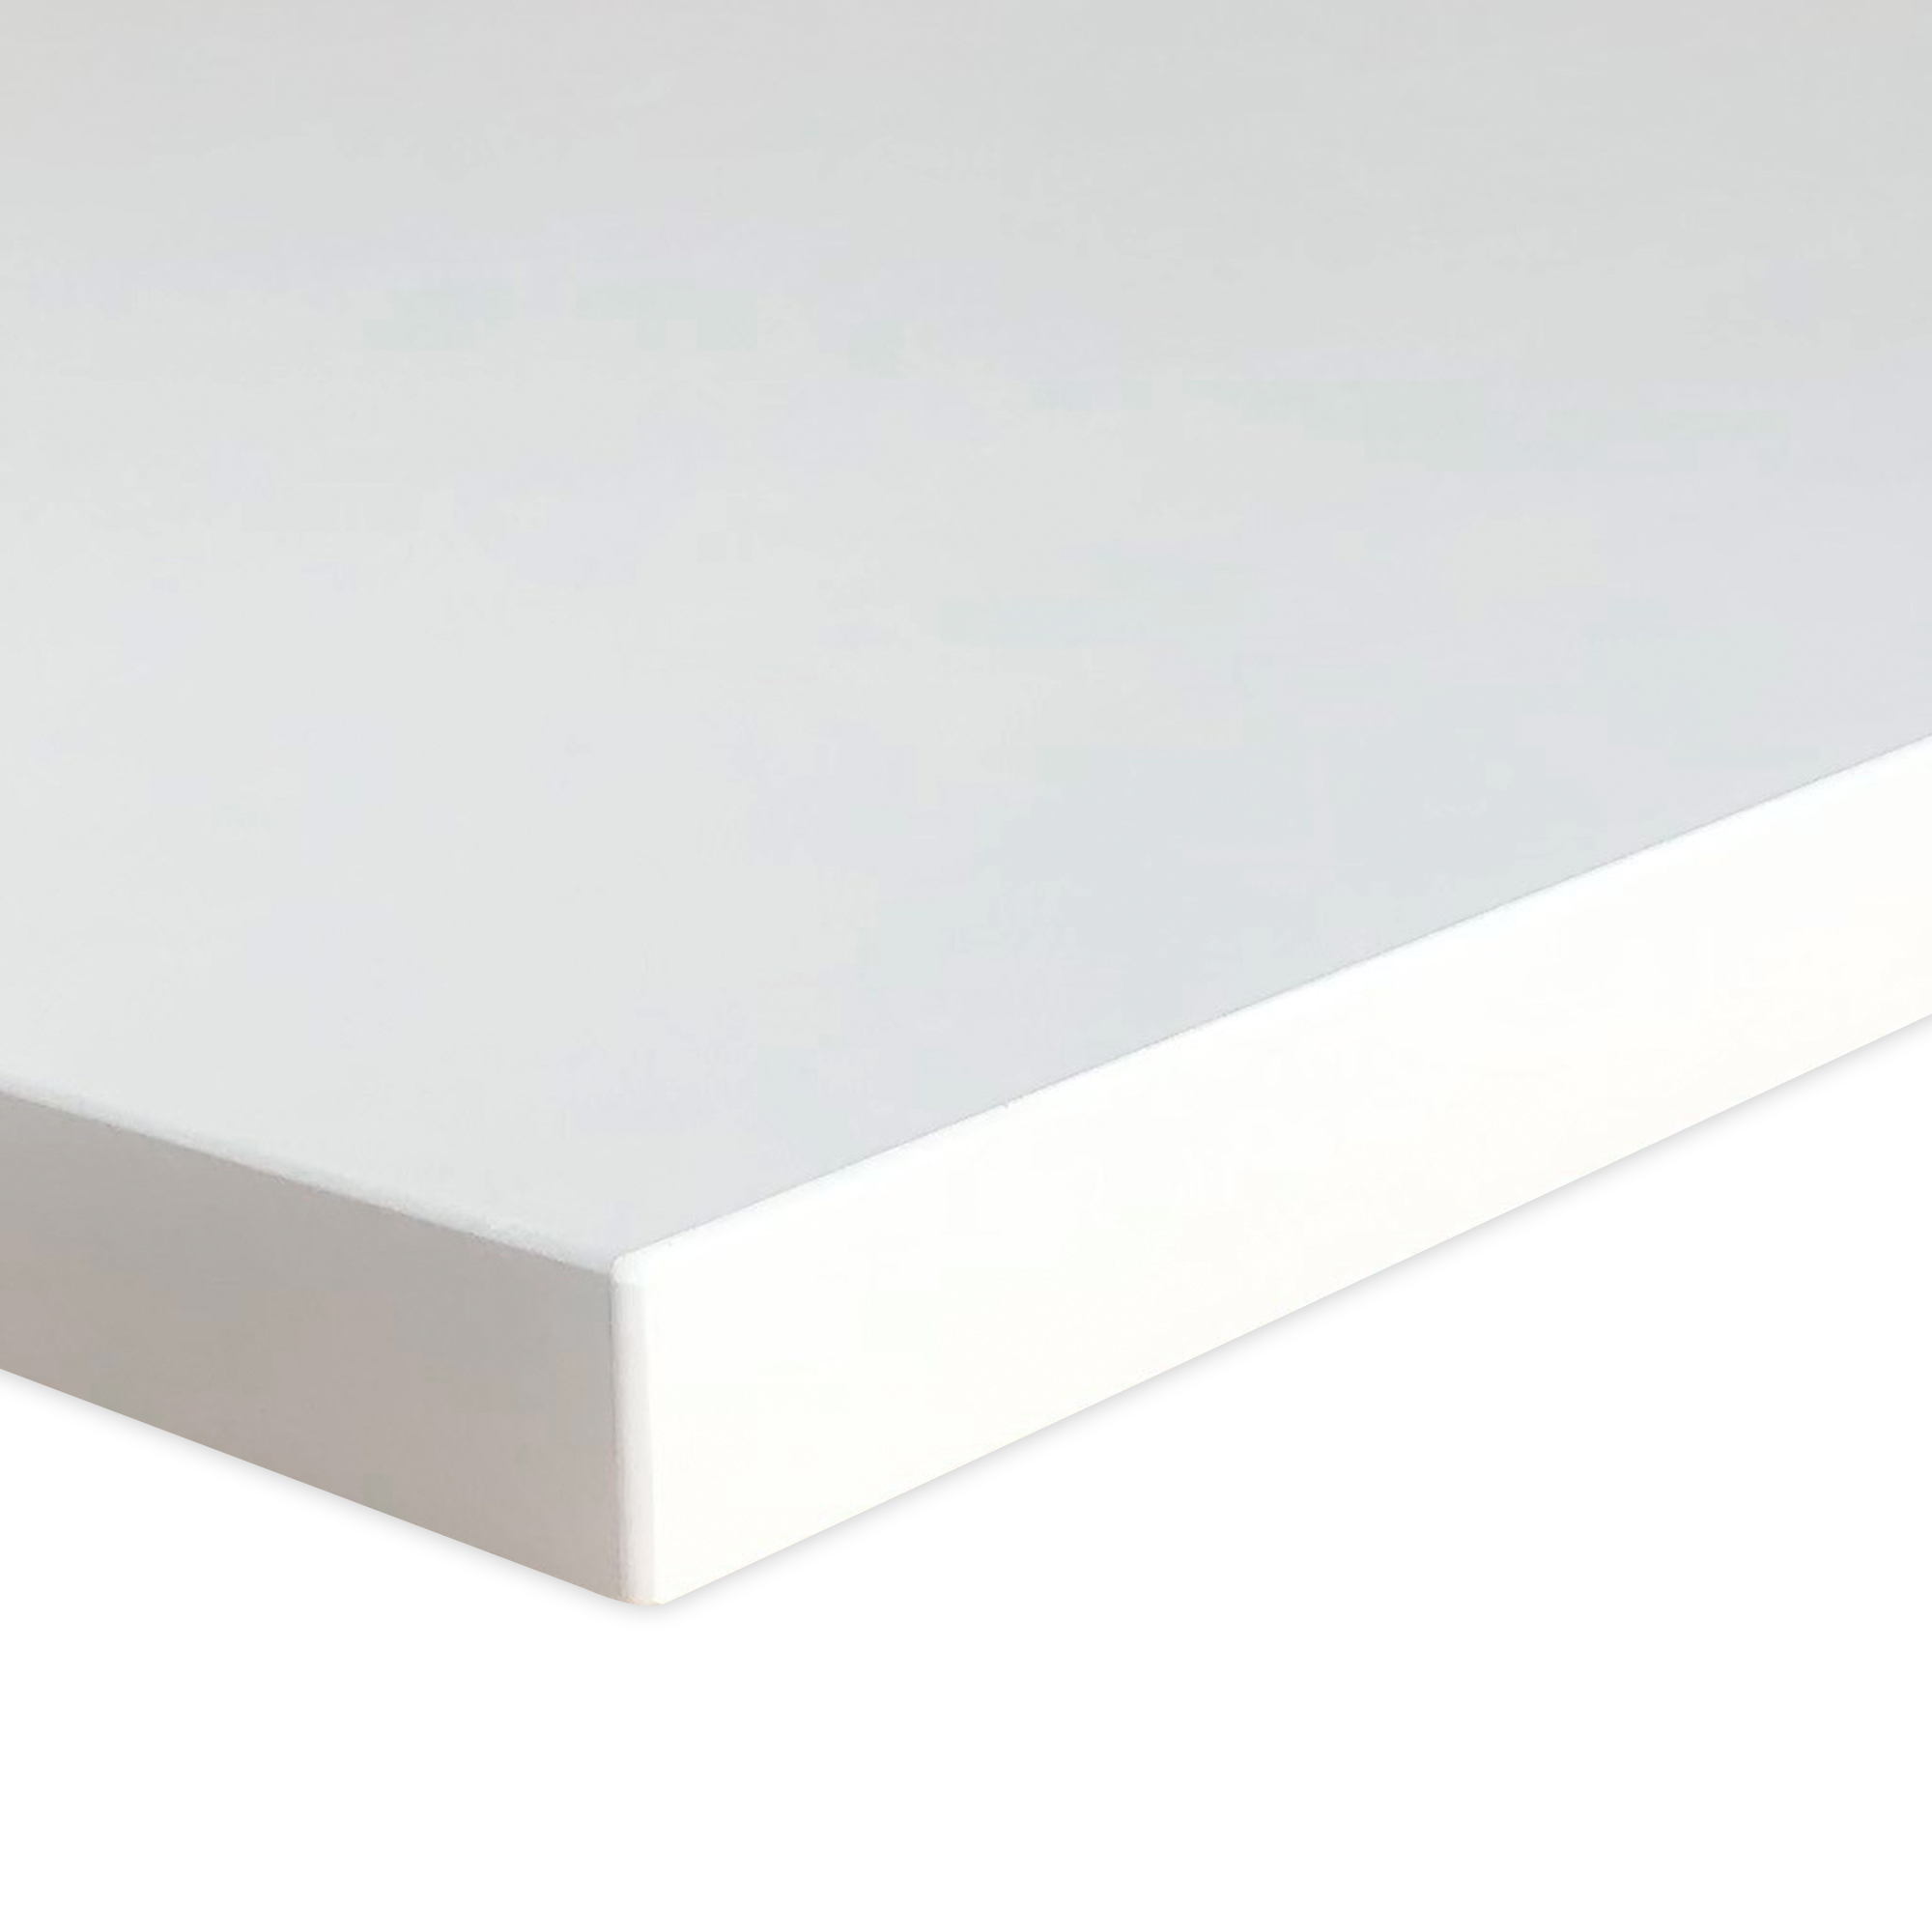 Tabletop | 070x60 cm | White